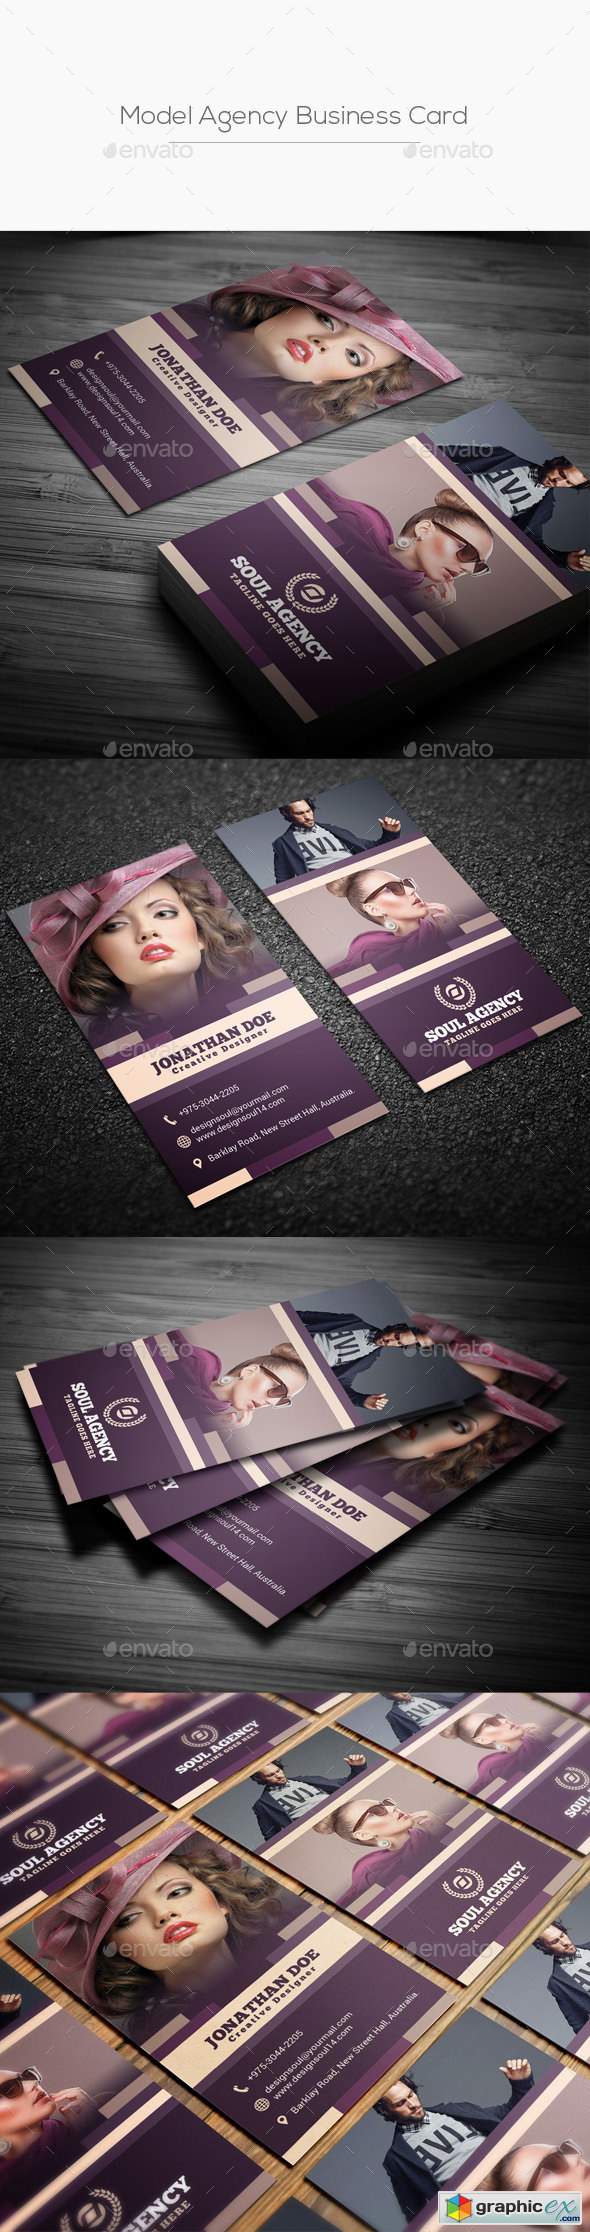 Model Agency Business Card